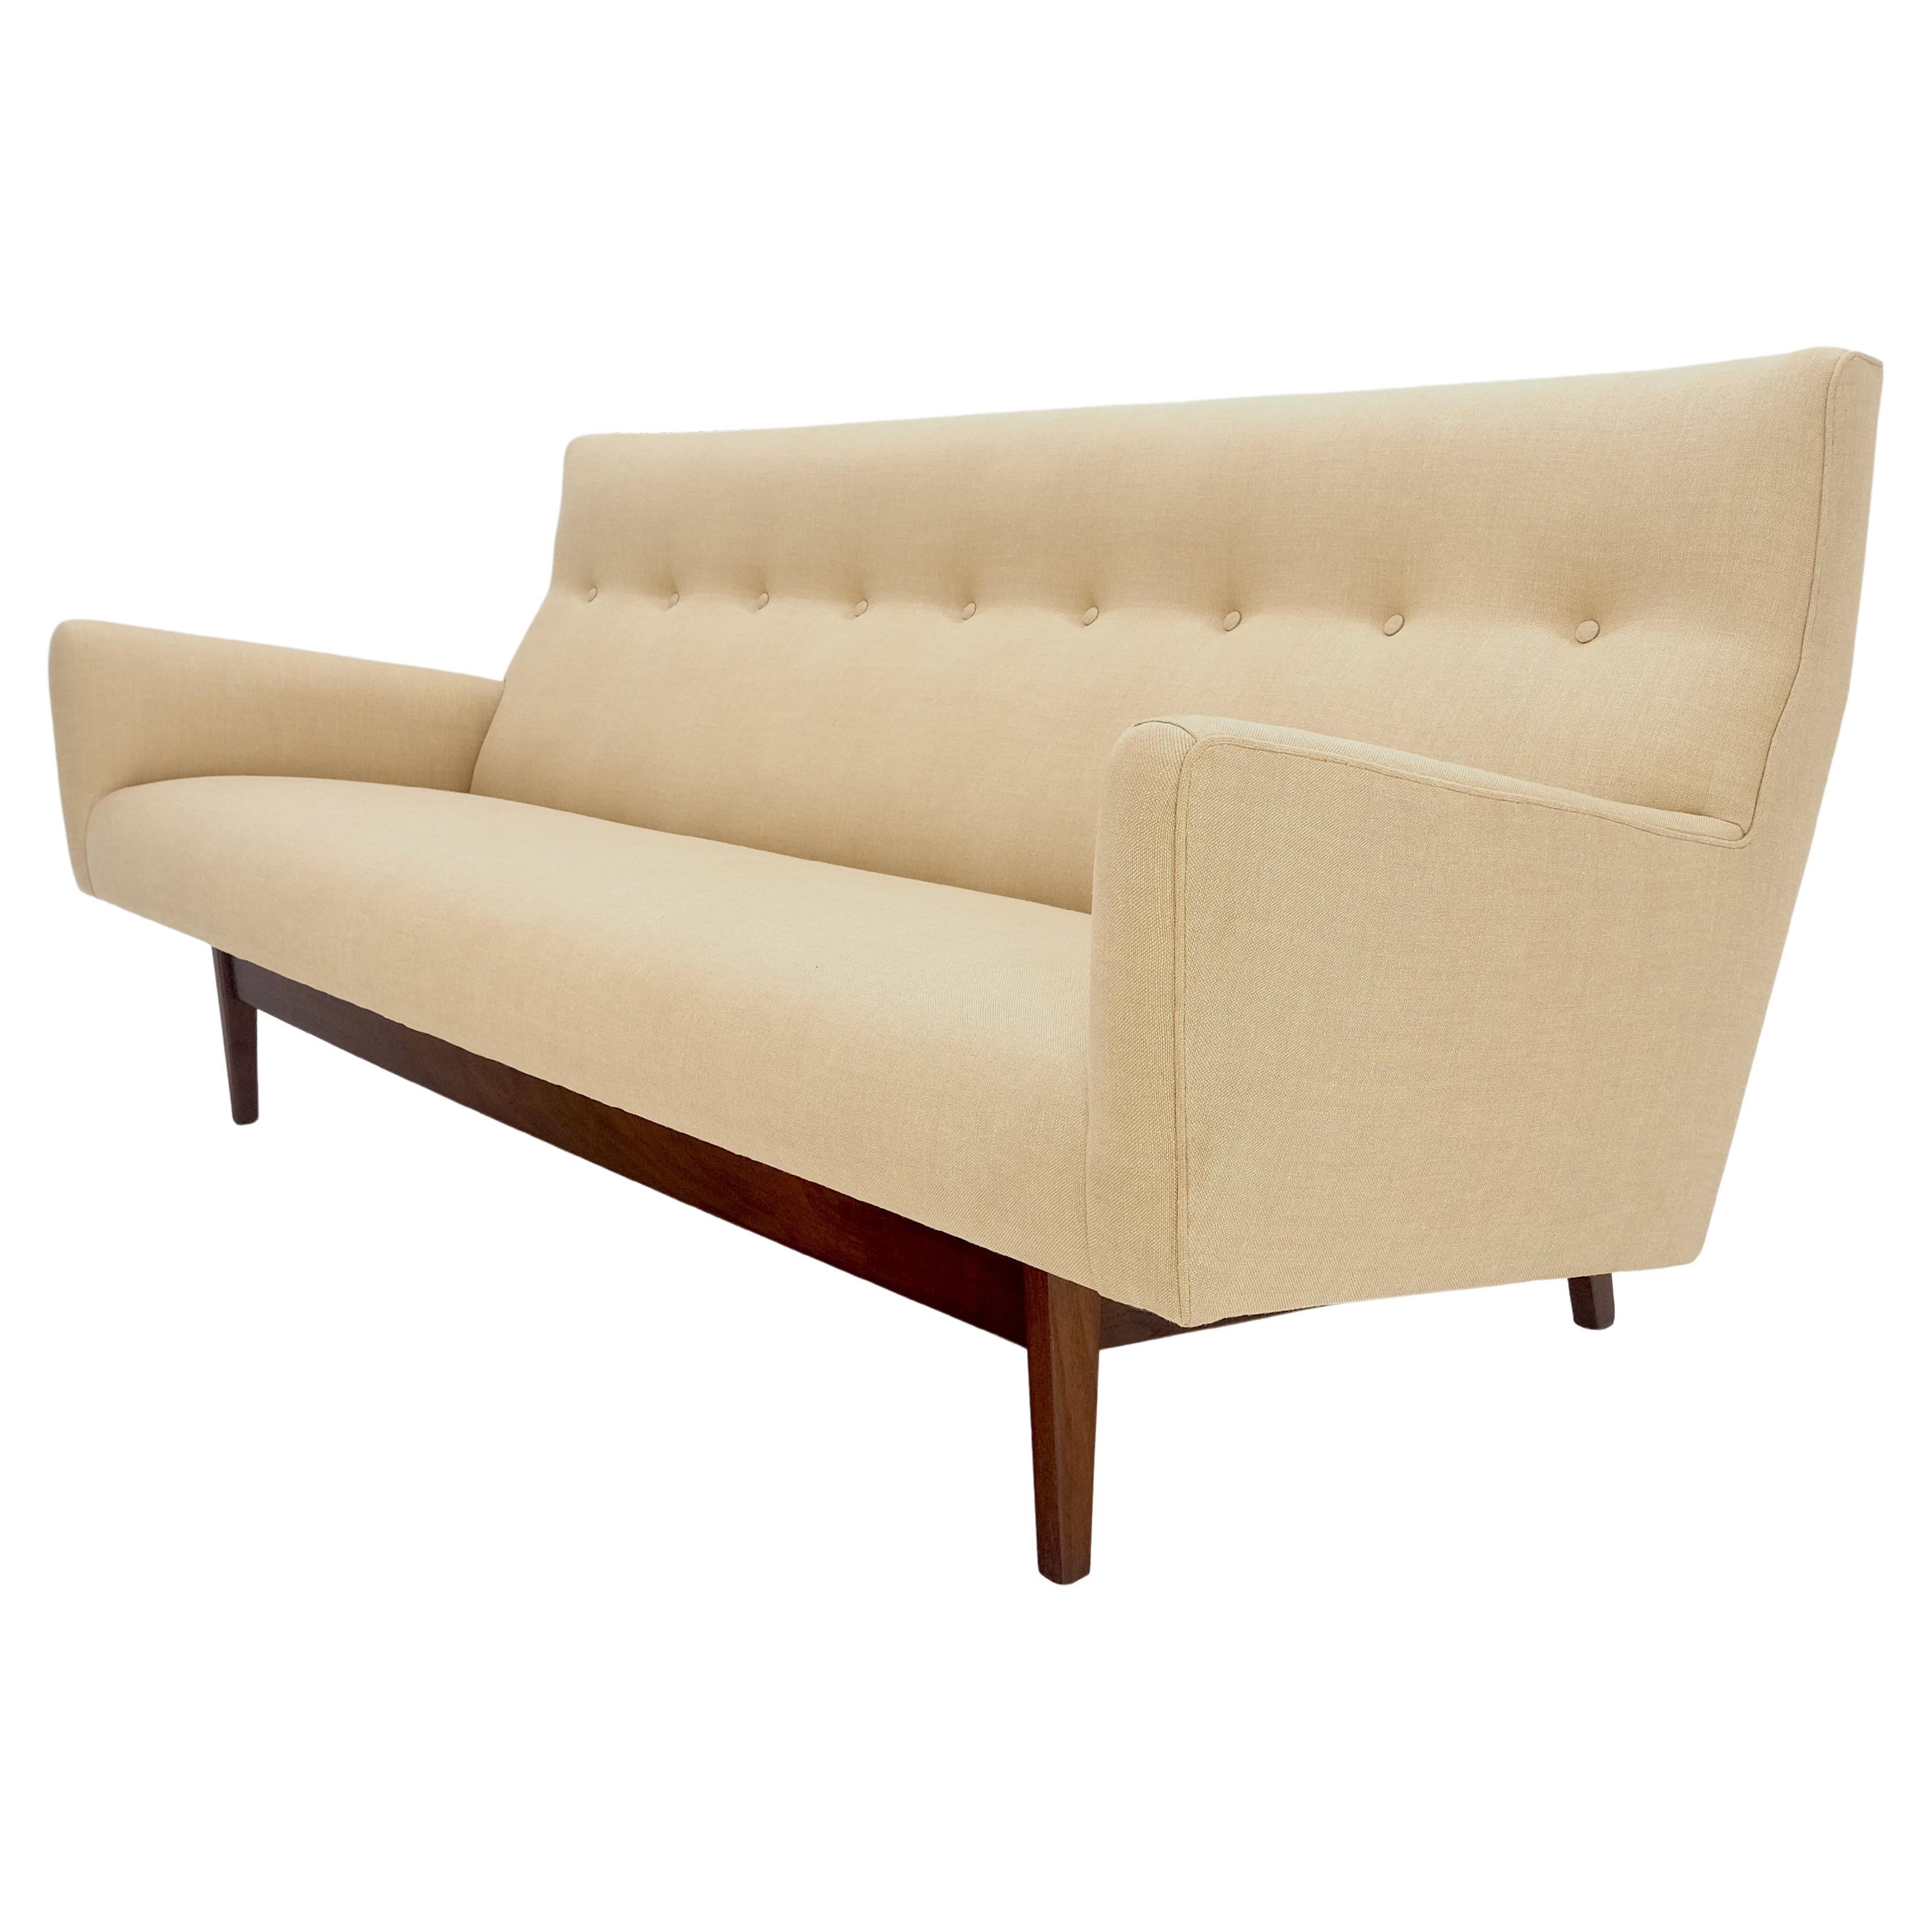 Jens Risom NEW Linen Upholstery Oiled Walnut Frame c1960s Sofa Couch MINT !